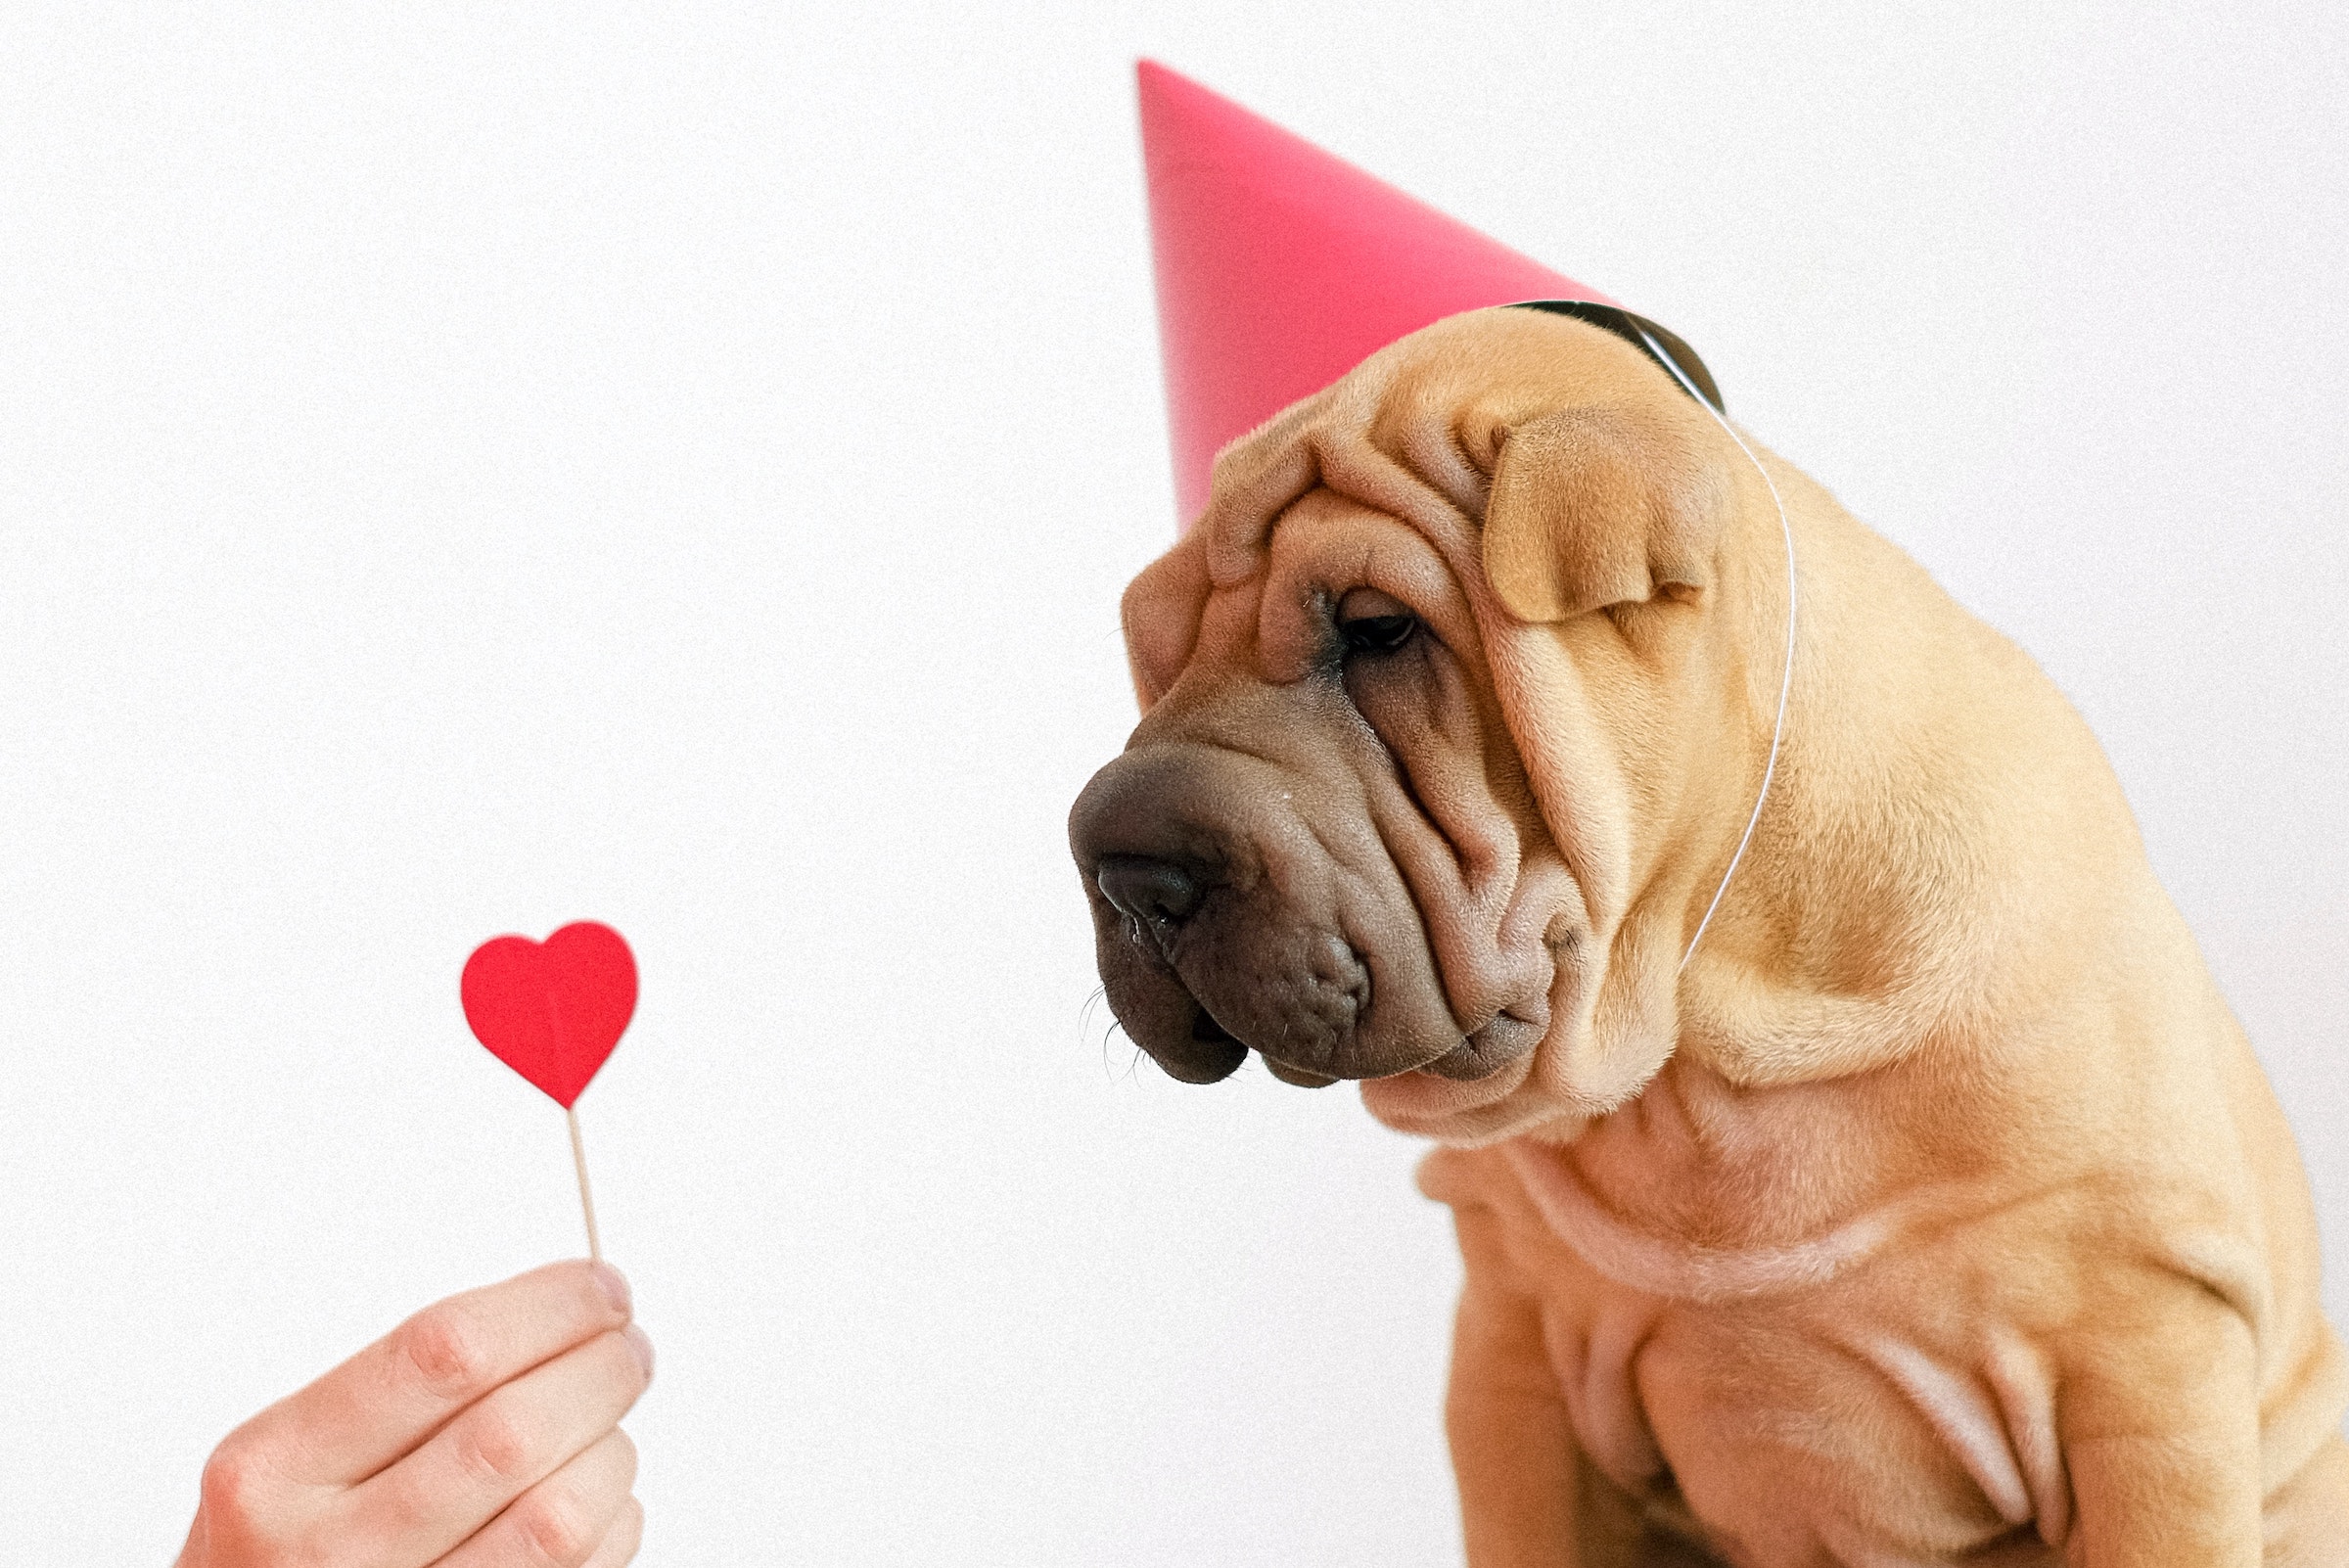 https://www.pawtracks.com/wp-content/uploads/sites/2/2023/01/shar-pei-dog-red-party-hat-hand-holding-heart-lollipop.jpg?fit=1024%2C683&p=1